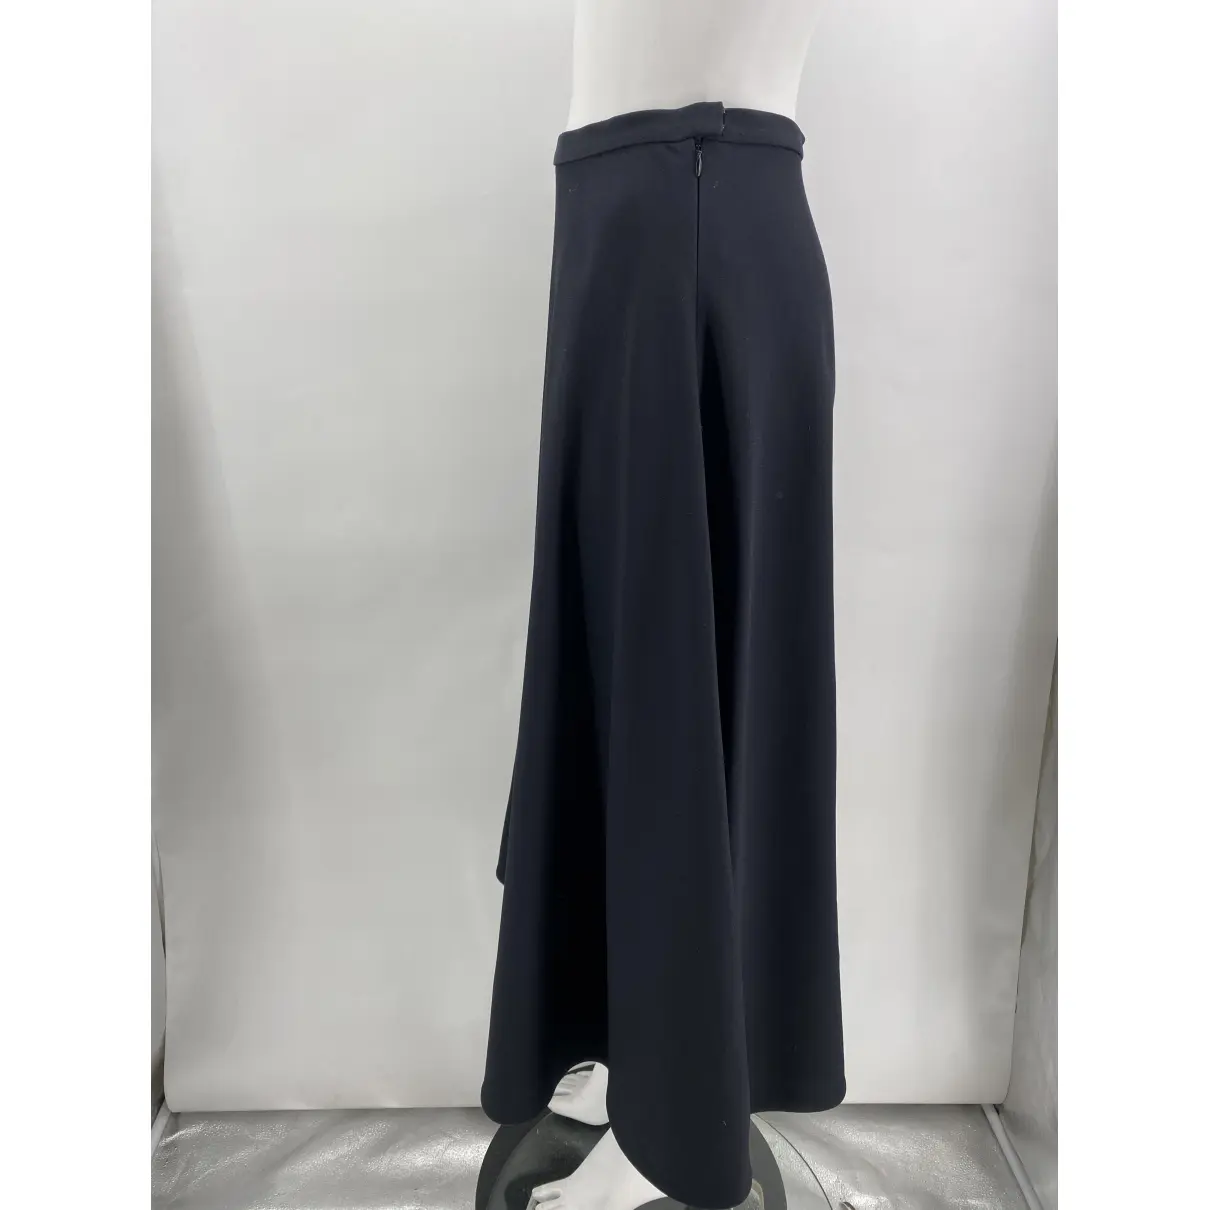 Buy Christian Dior Wool mid-length skirt online